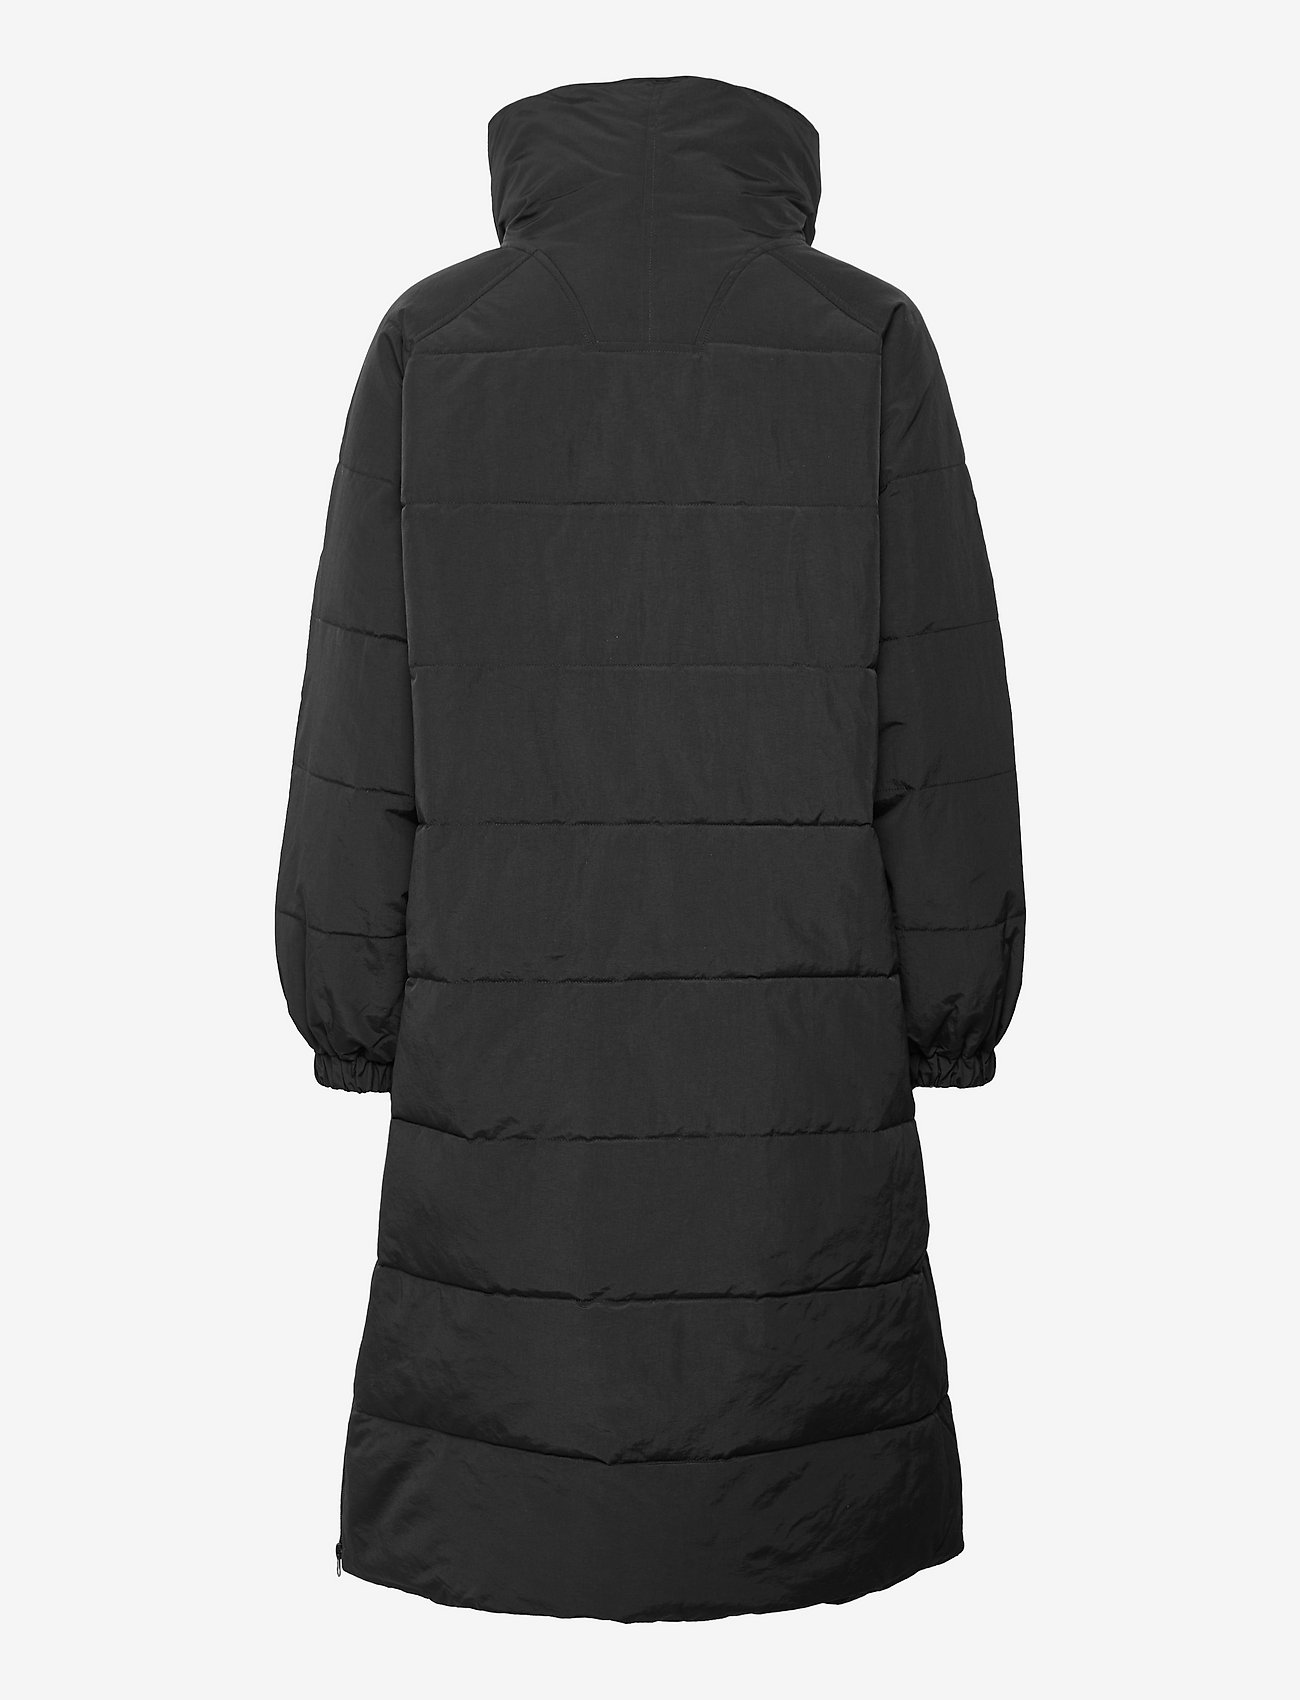 Love Copenhagen - LCLillo Puffer jacket - winter jackets - pitch black - 1